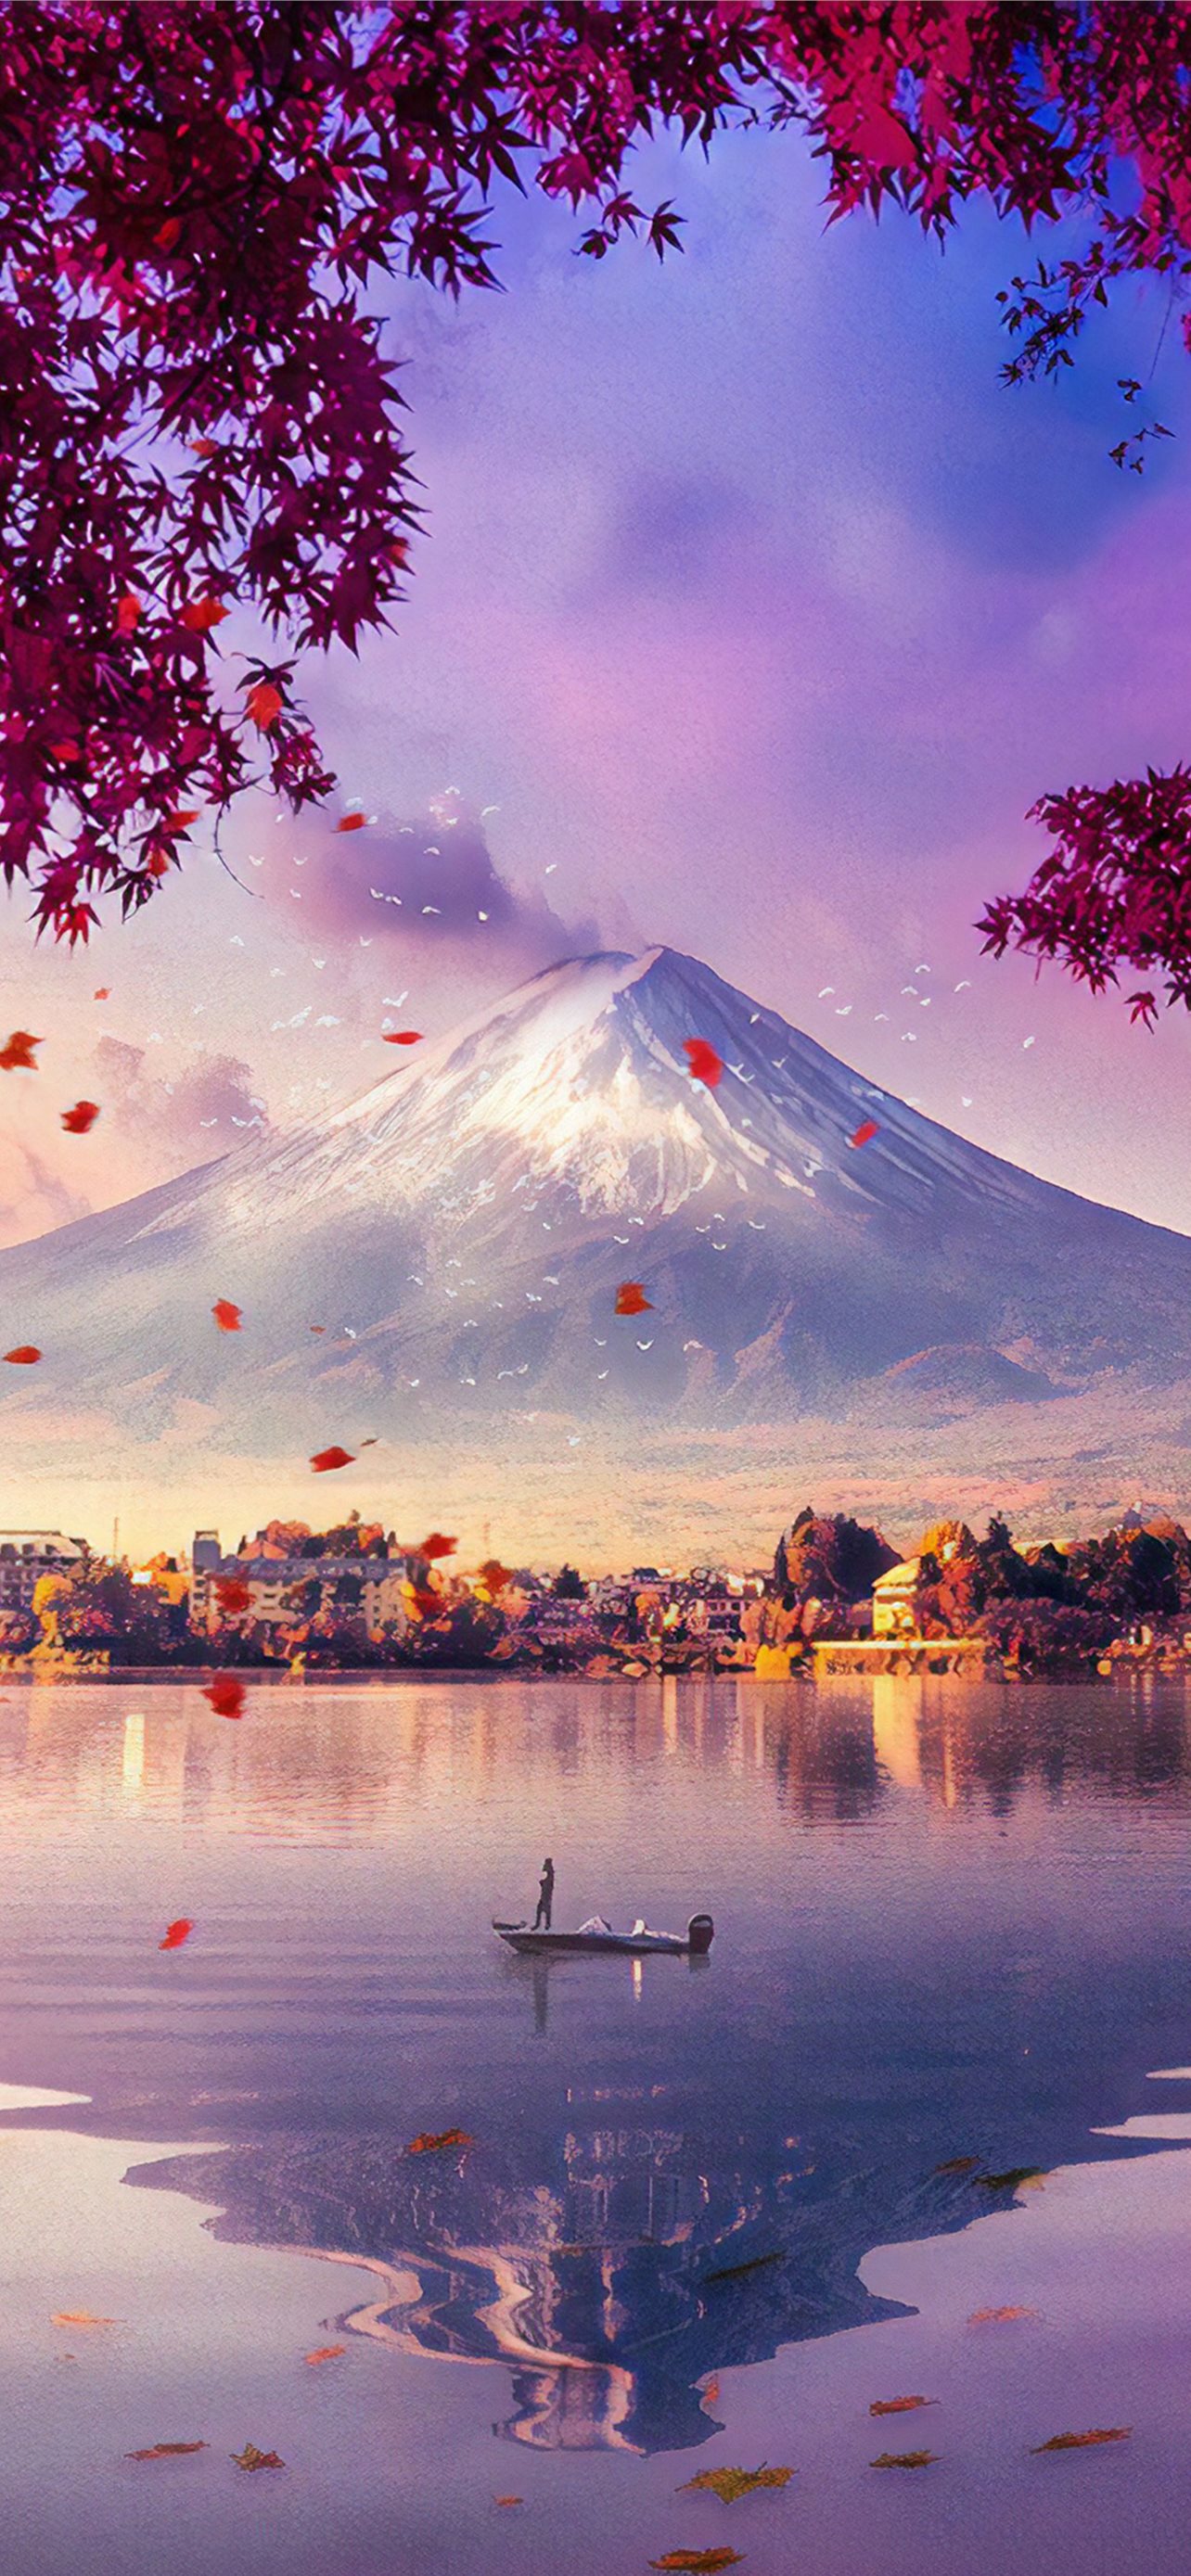 Mount Fuji Photos Download The BEST Free Mount Fuji Stock Photos  HD  Images